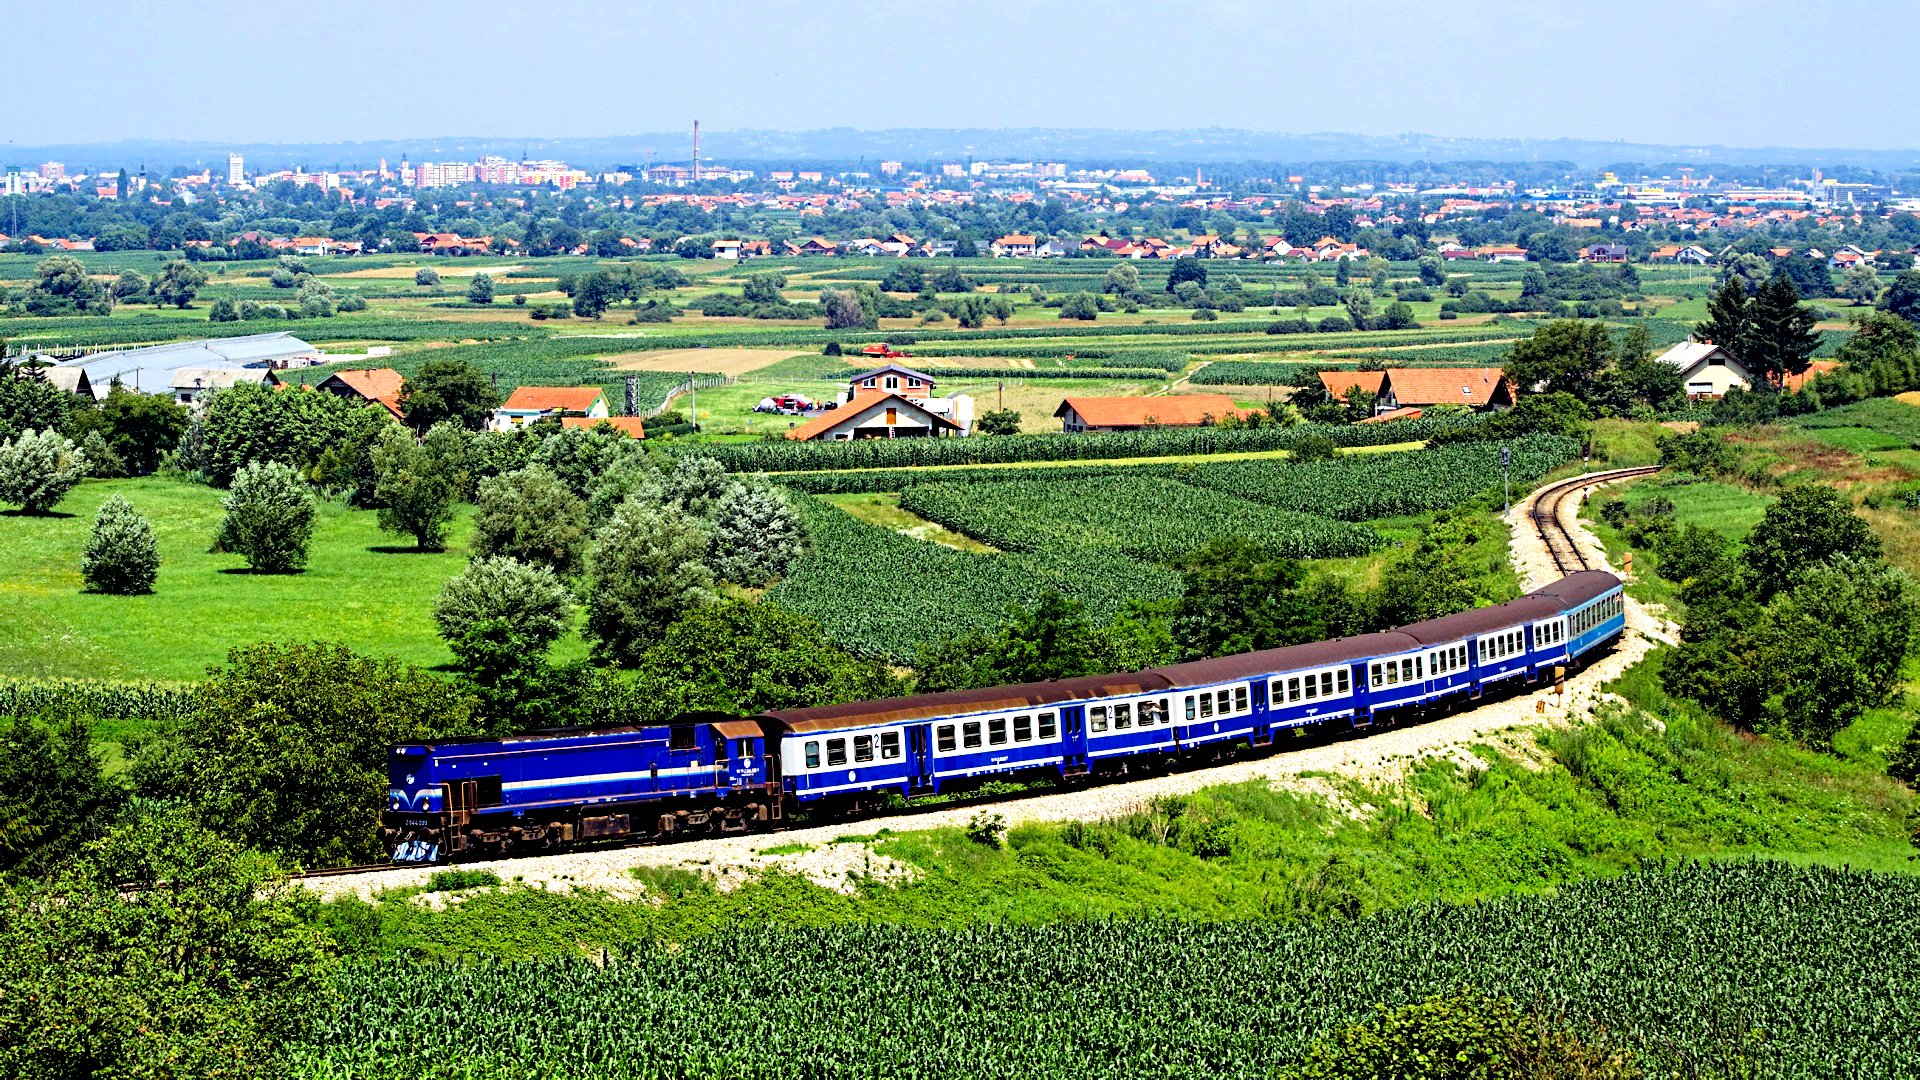 train, countryside, landscape, vehicles, field